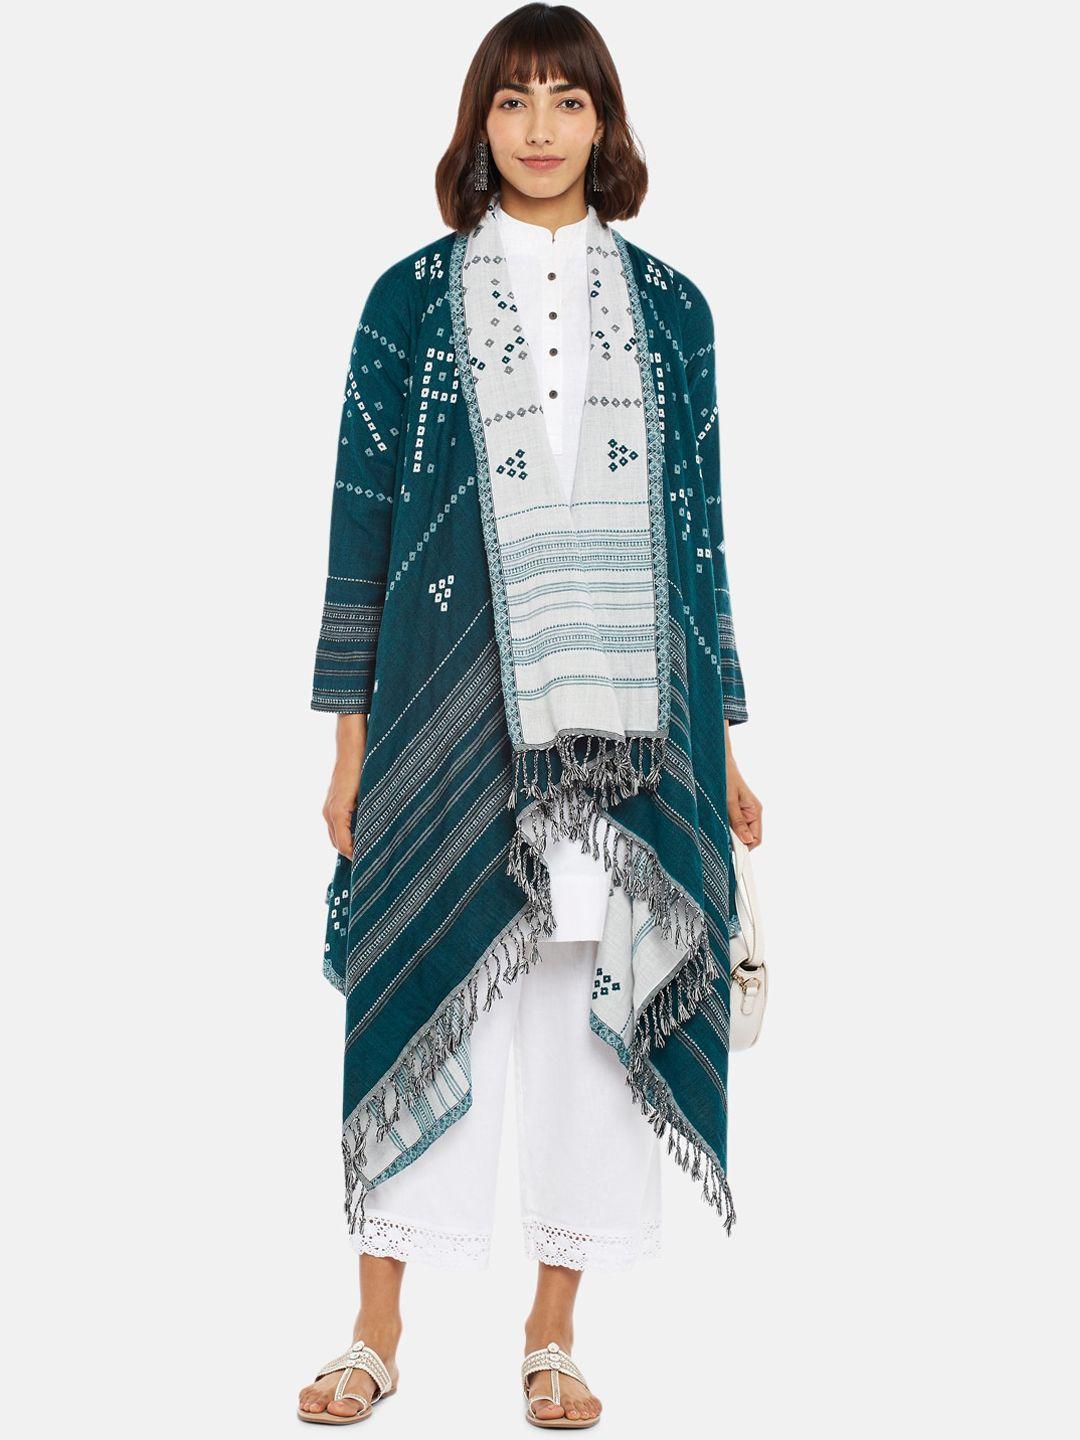 rangmanch by pantaloons women teal & white acrylic longline open front jacket